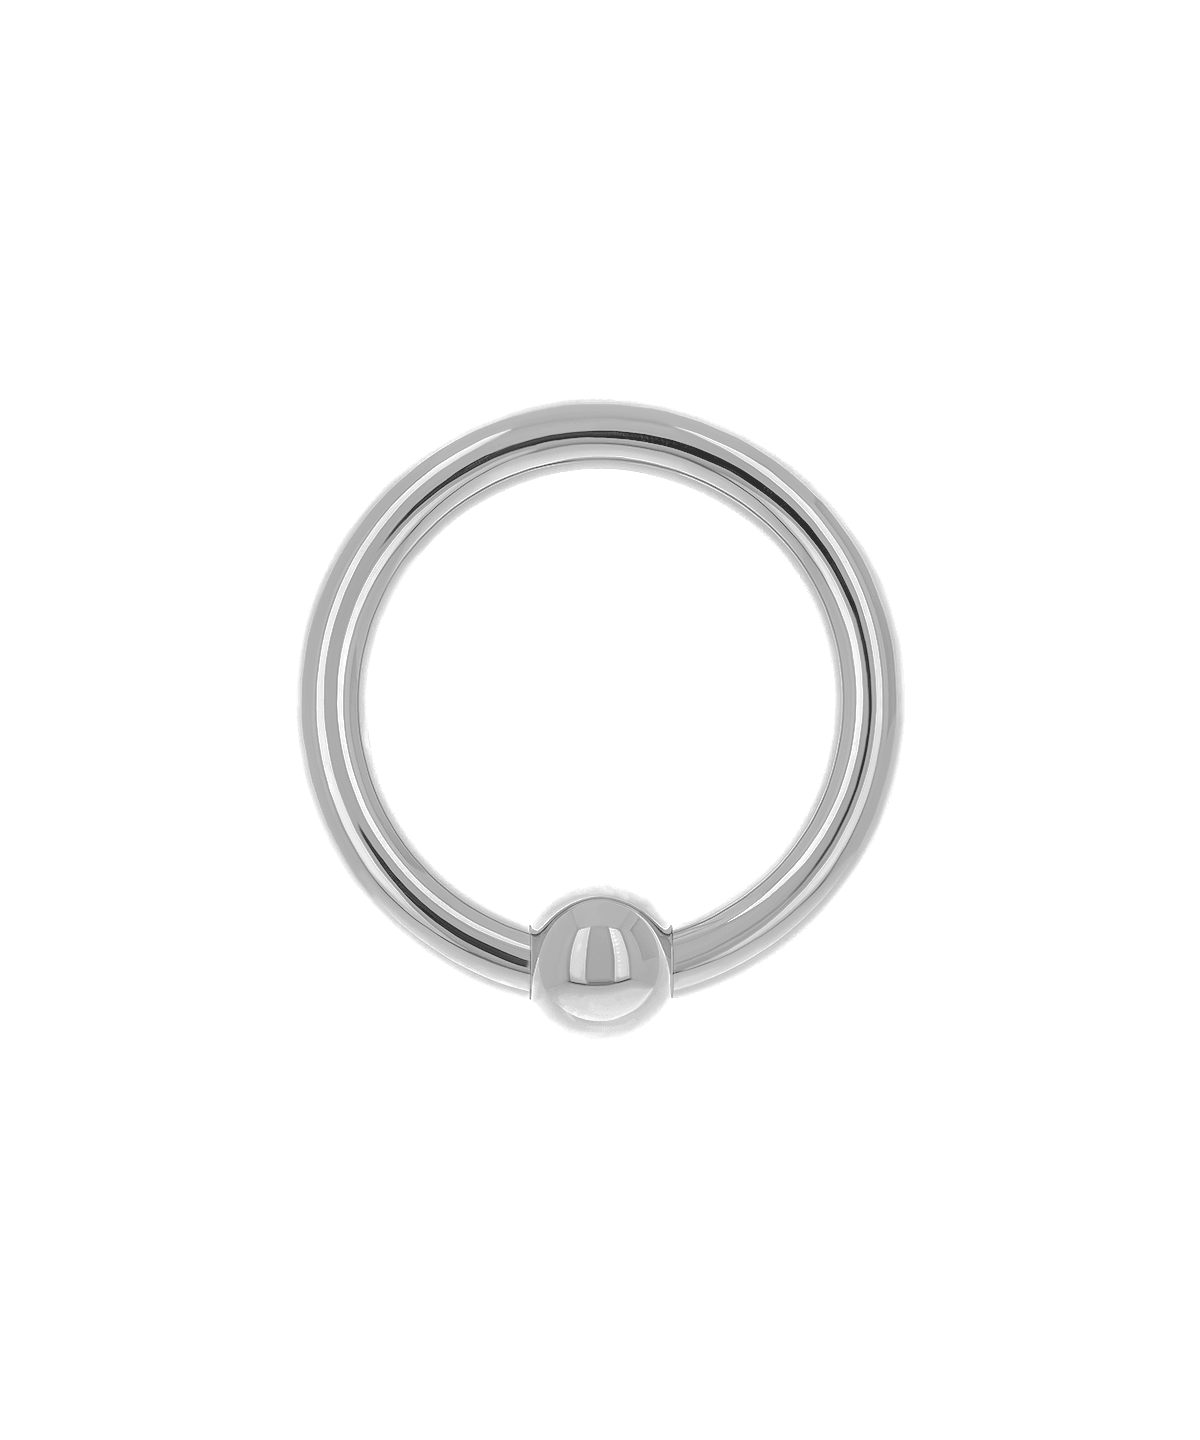 Captive Bead Ring with Bead - Niobium